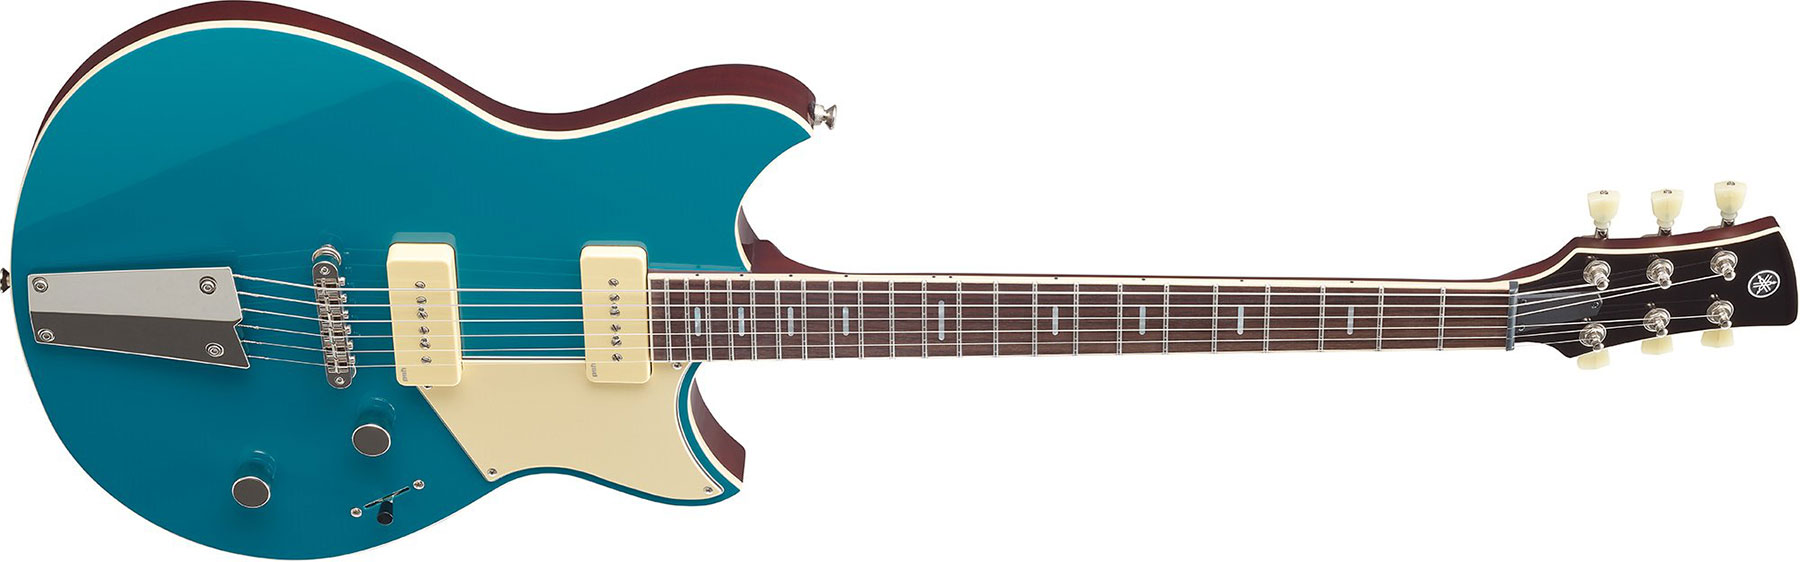 Yamaha Rss02t Revstar Standard 2p90 Ht Rw - Swift Blue - Double Cut E-Gitarre - Variation 1